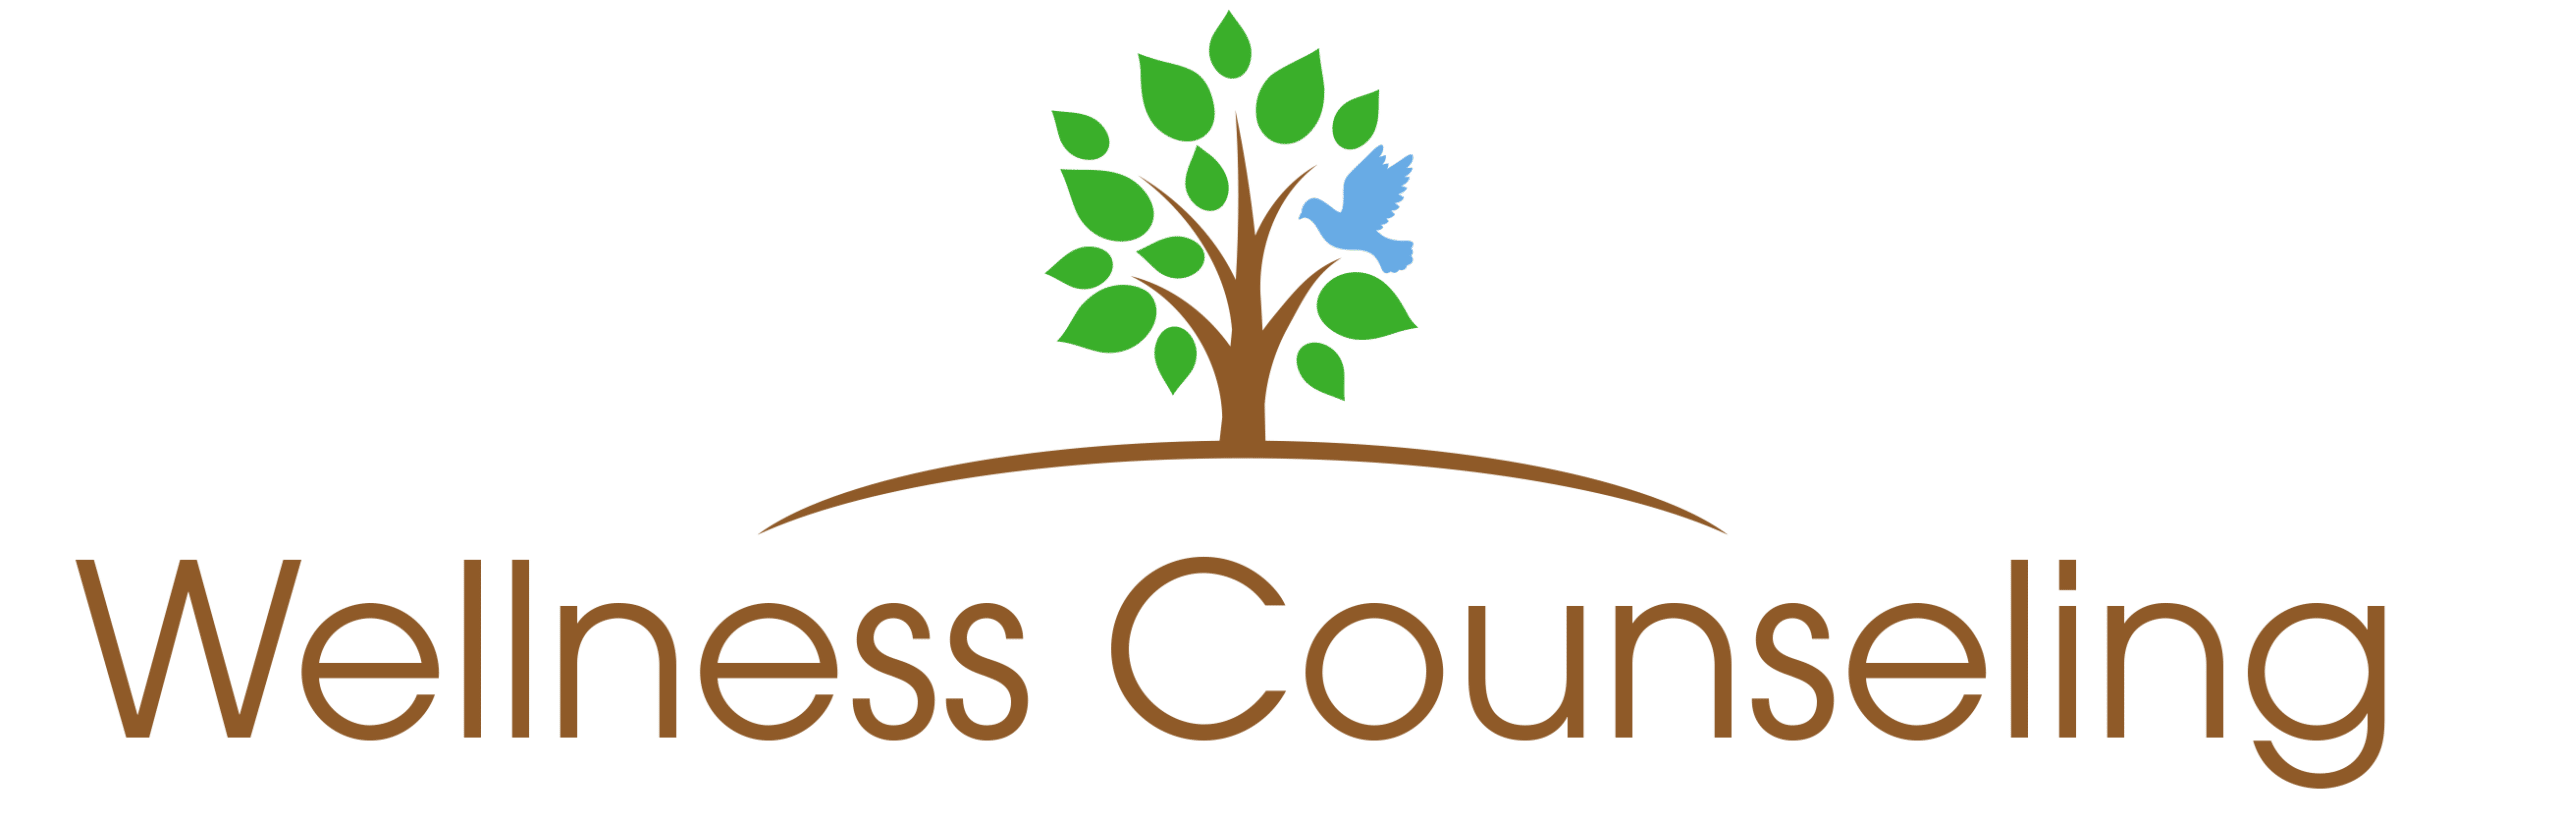 Large wellness counseling logo